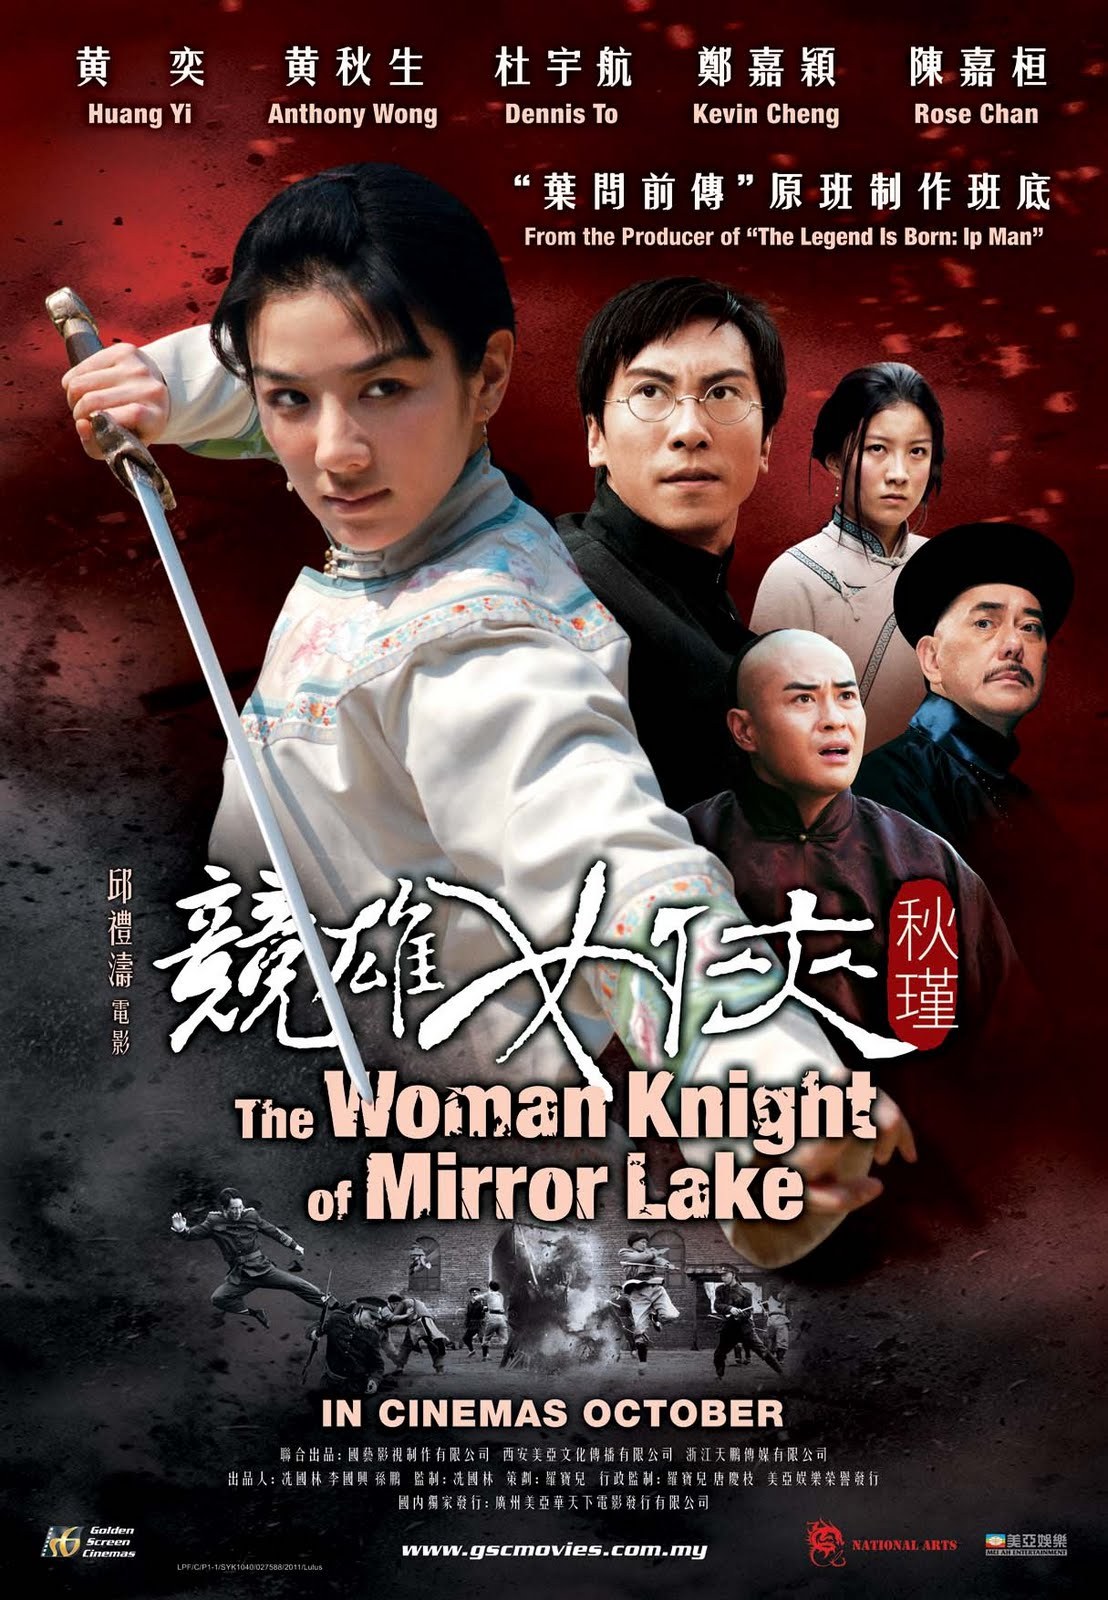 The Woman Knight of Mirror Lake (2011) ซิวจิน วีรสตรีพลิกชาติ - ดูหนังออนไลน